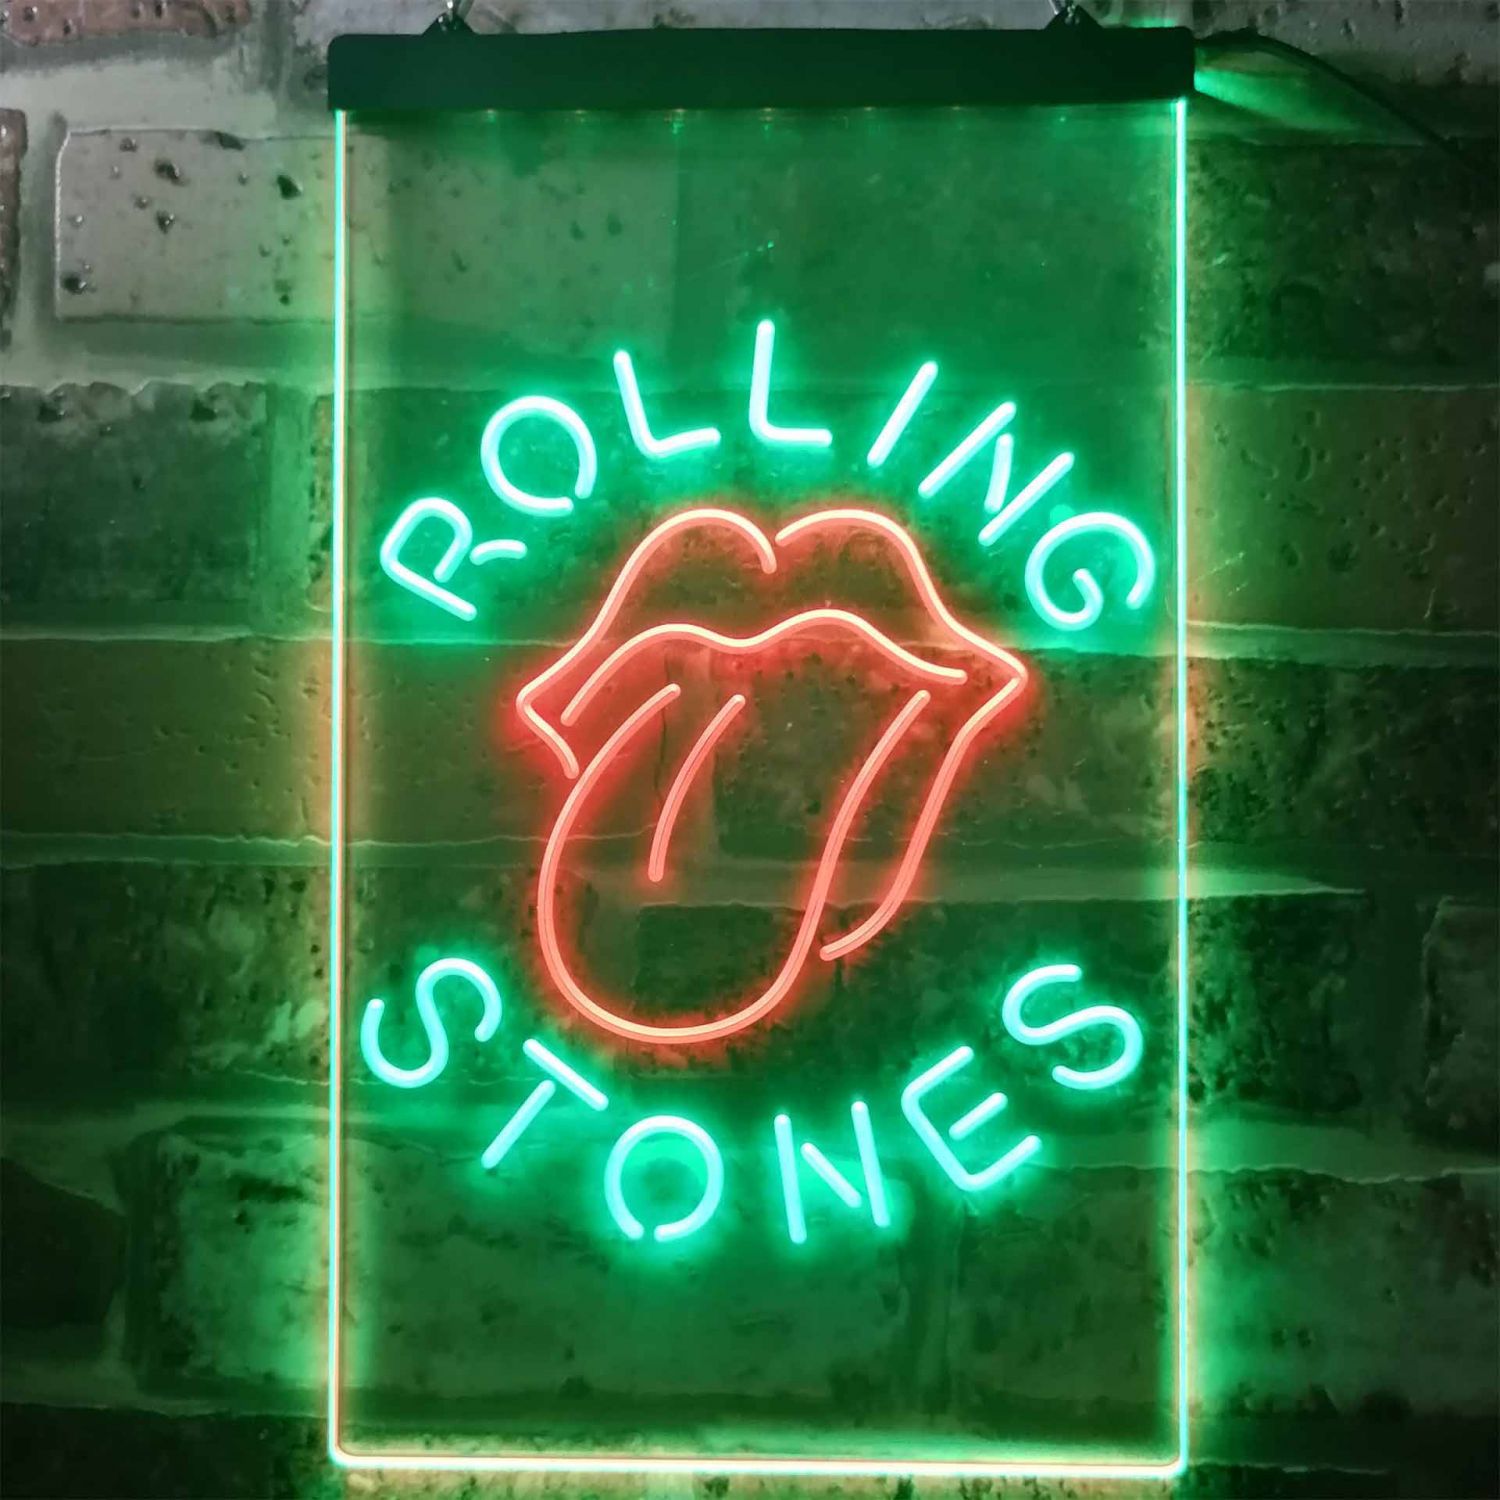 Rolling stones neon sign